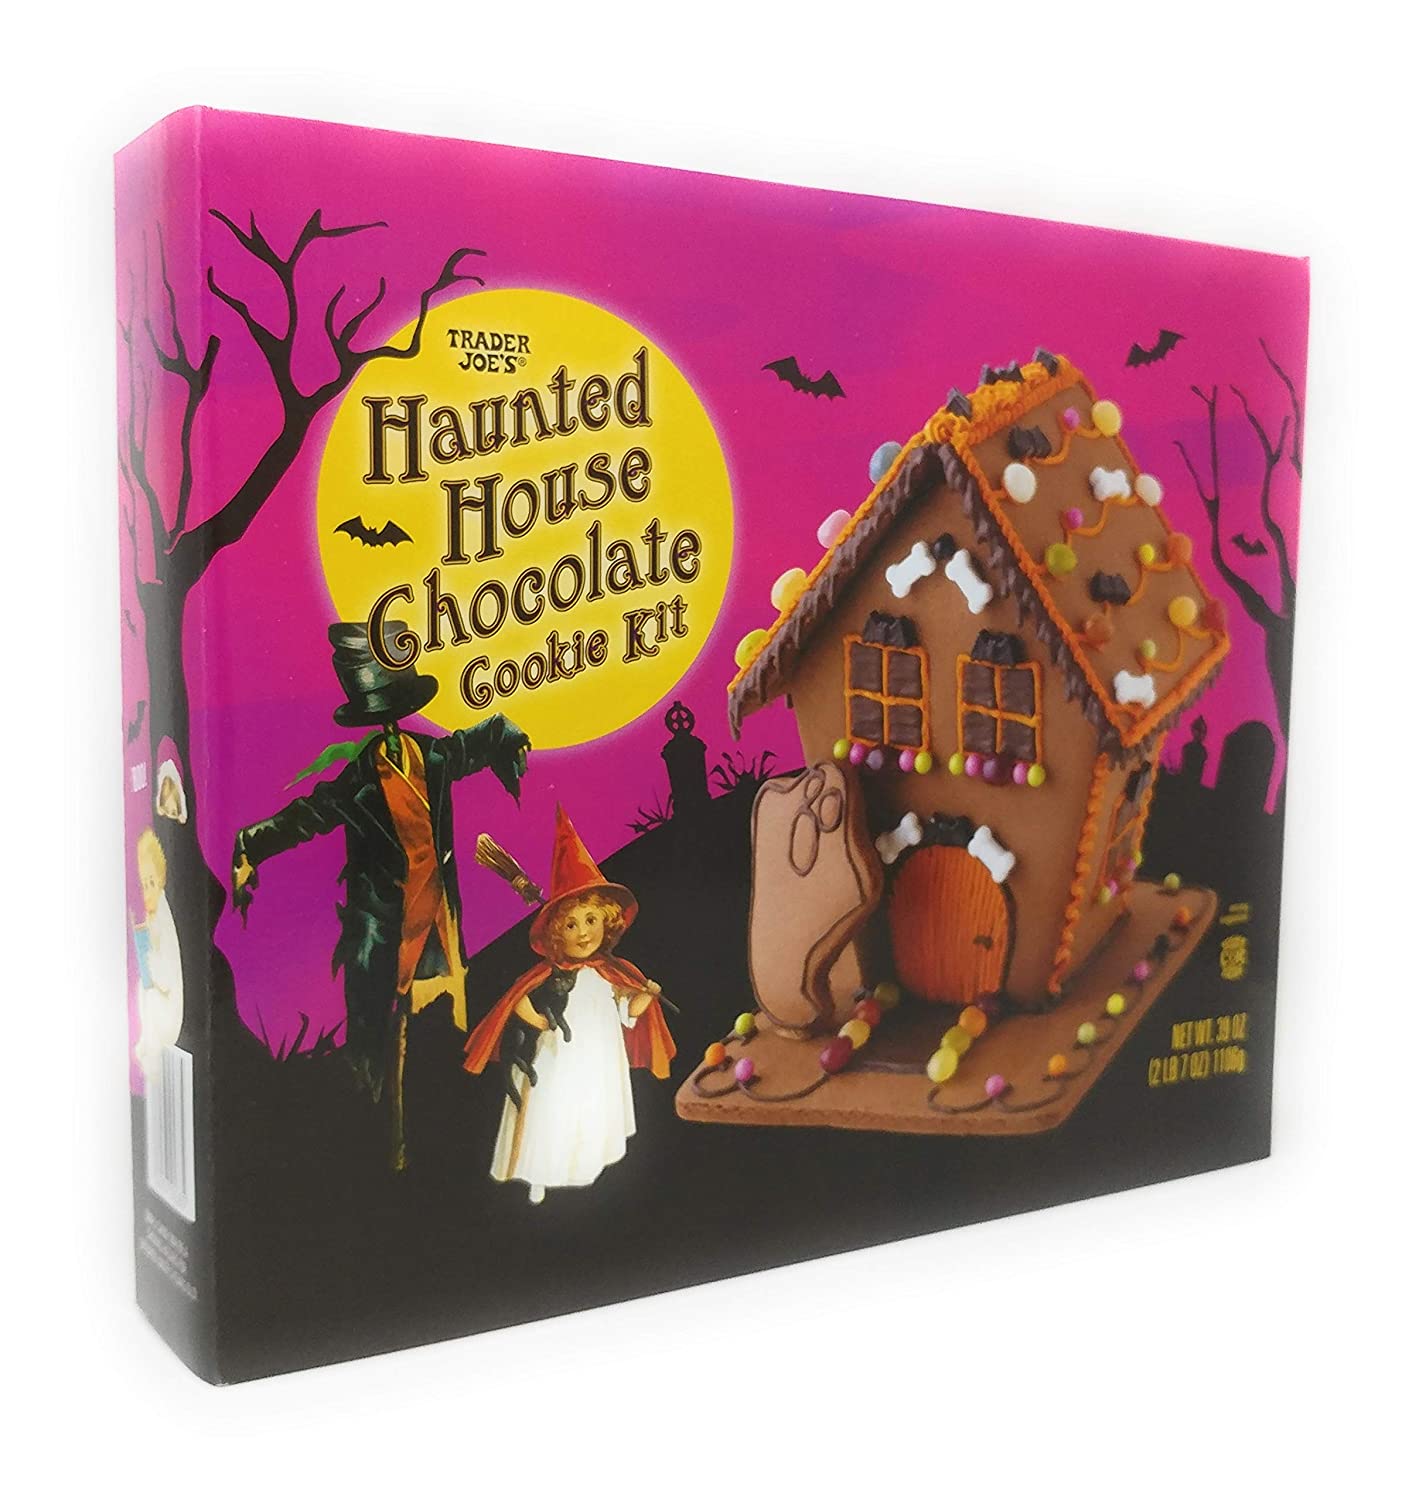 Trader Joe's Haunted House Cookie Kit